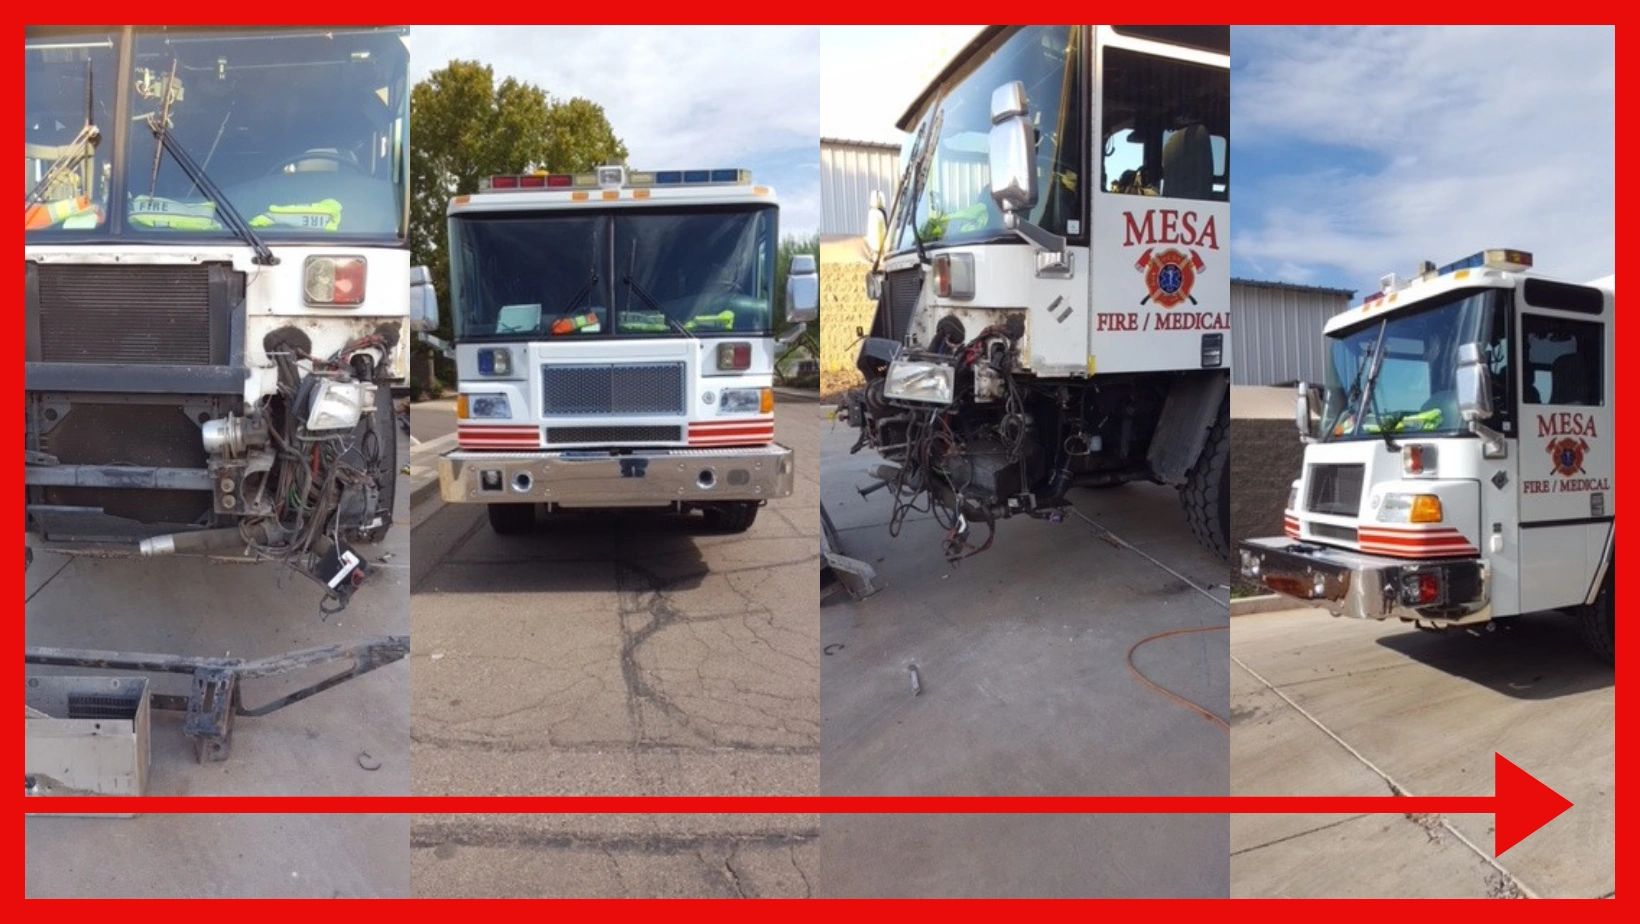 Fire Truck collision repair, ambulance collision repair and paint, emergency vehicle collision repai